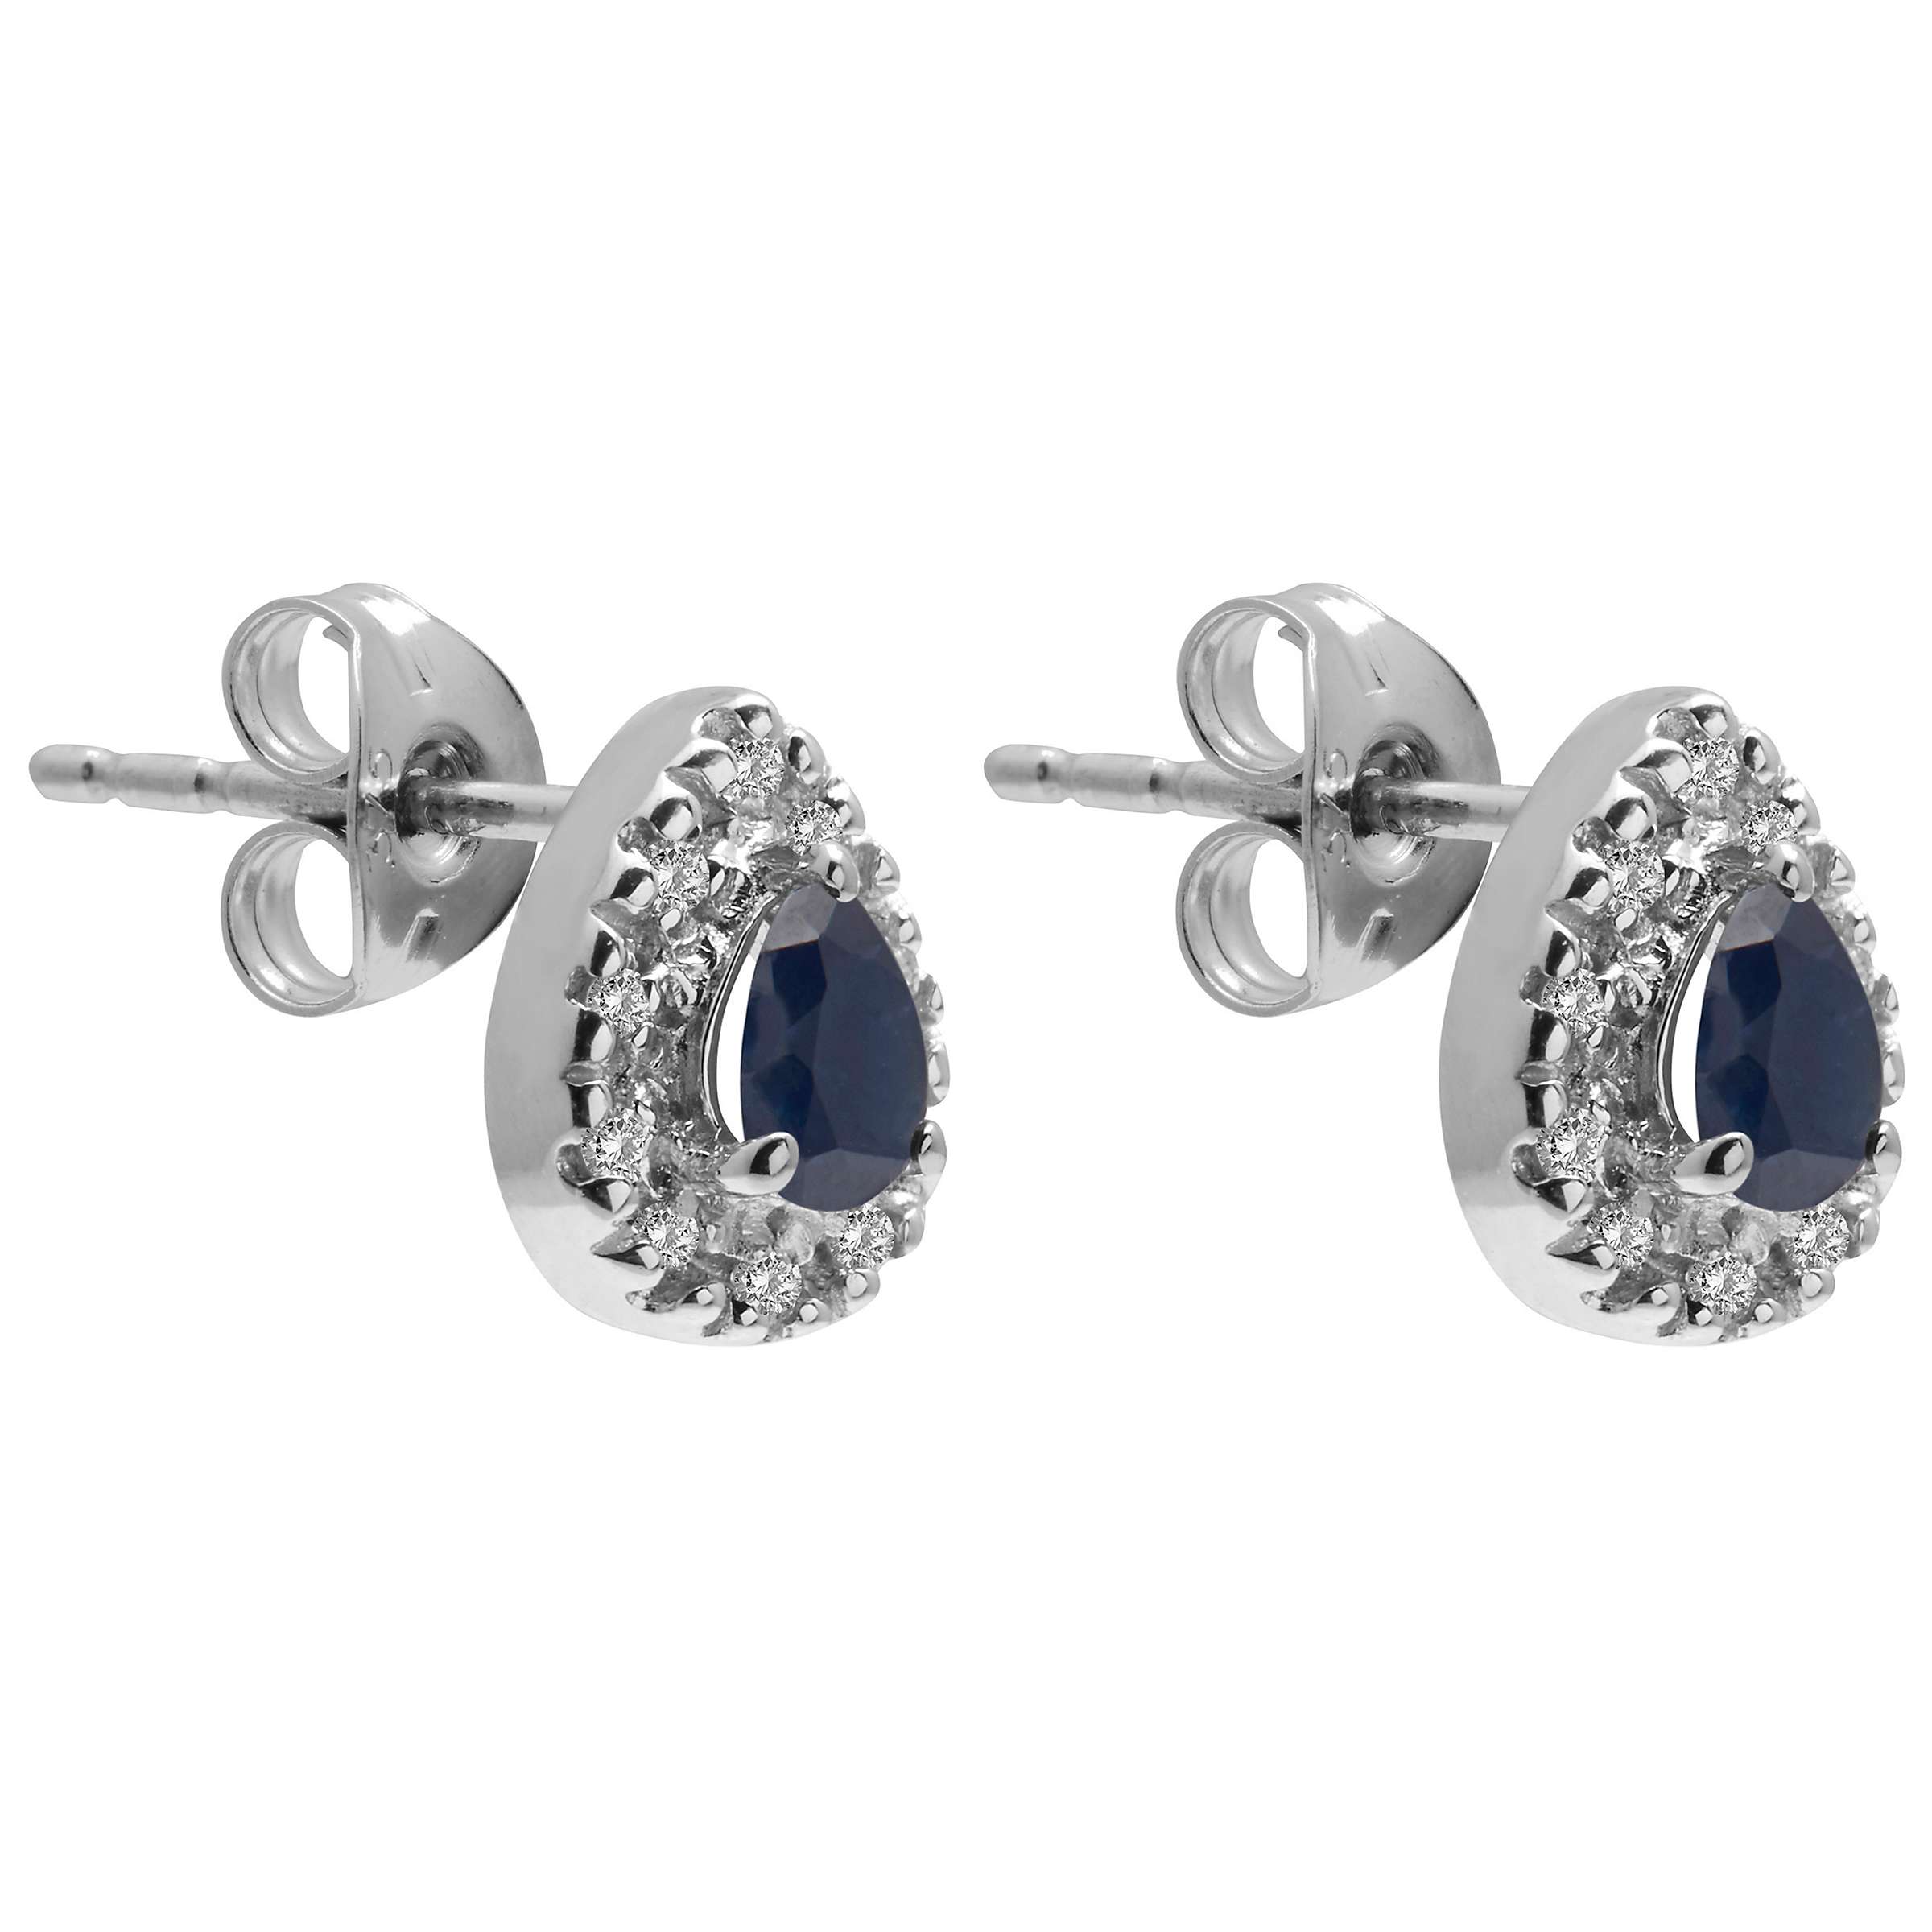 Buy A B Davis 9ct Gold Diamond and Precious Stone Teardrop Stud Earrings Online at johnlewis.com